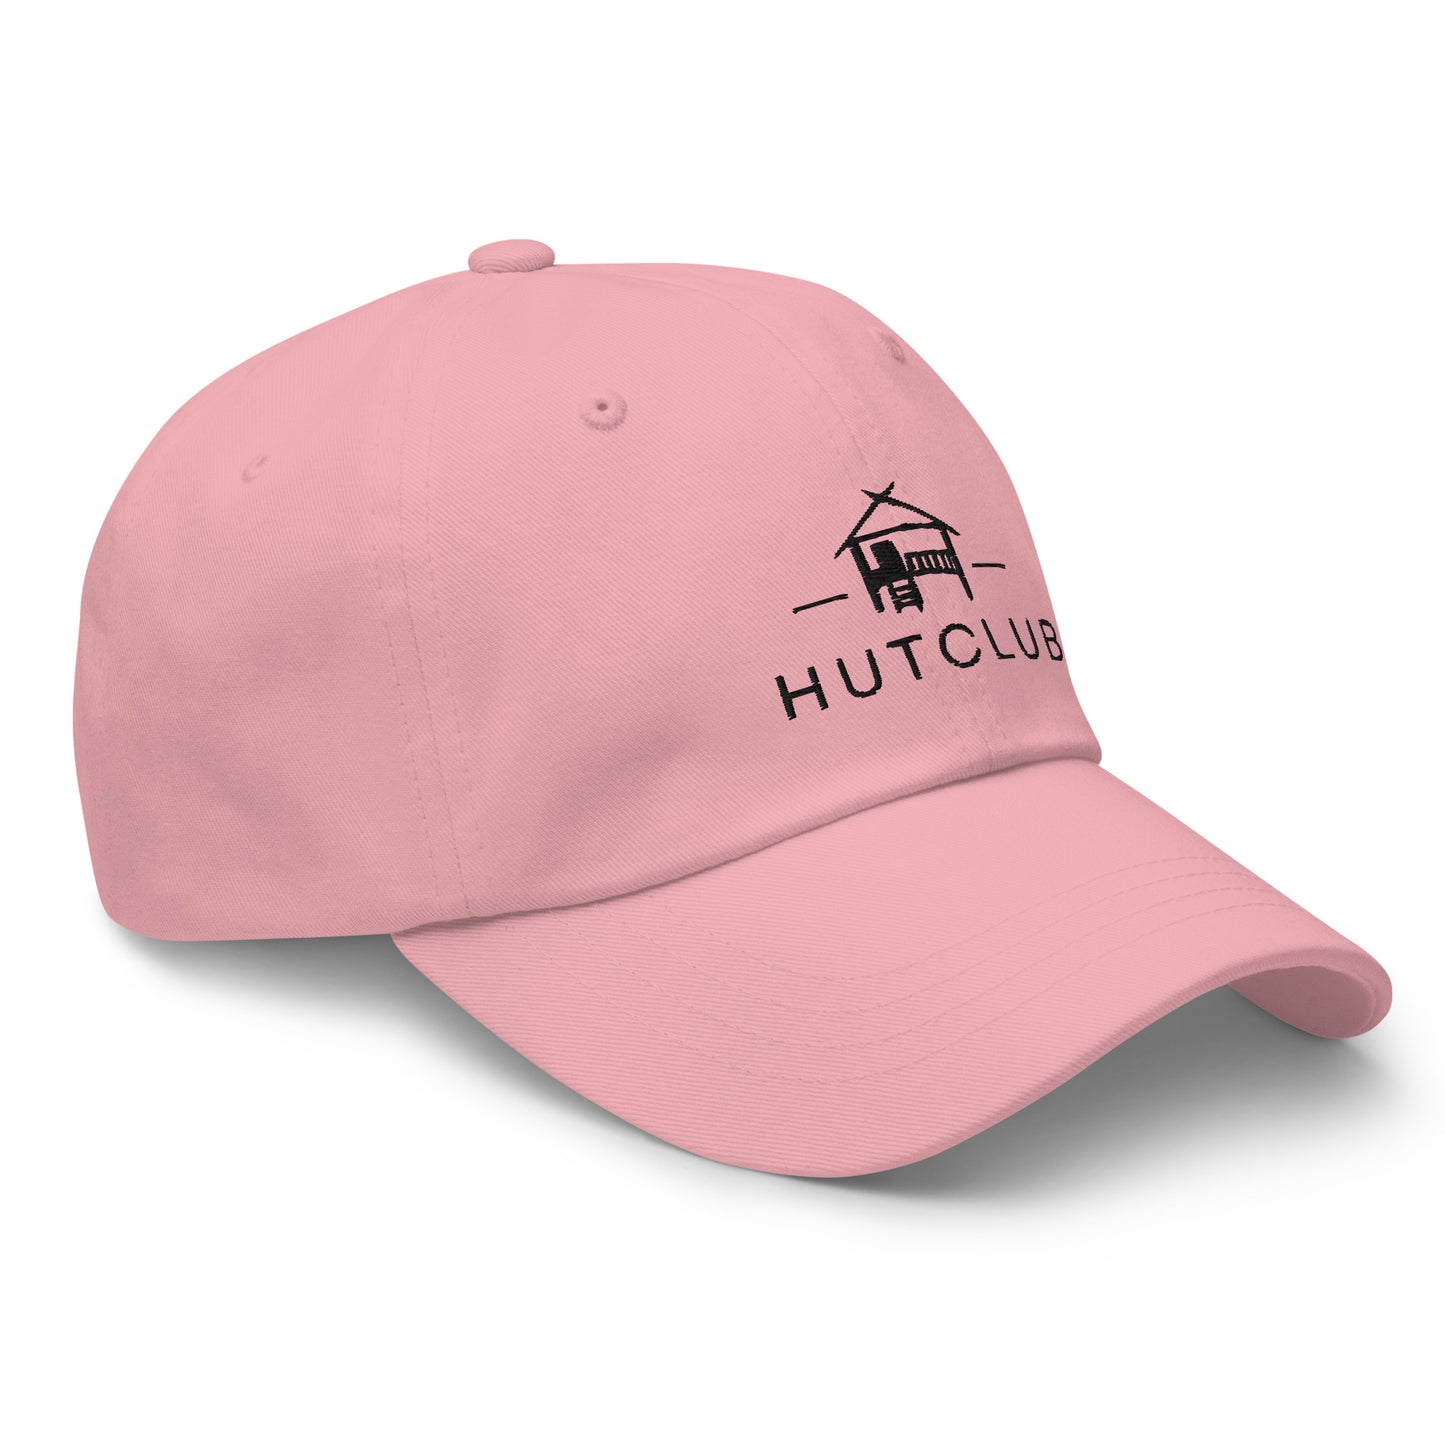 Hutclub Dad Hat